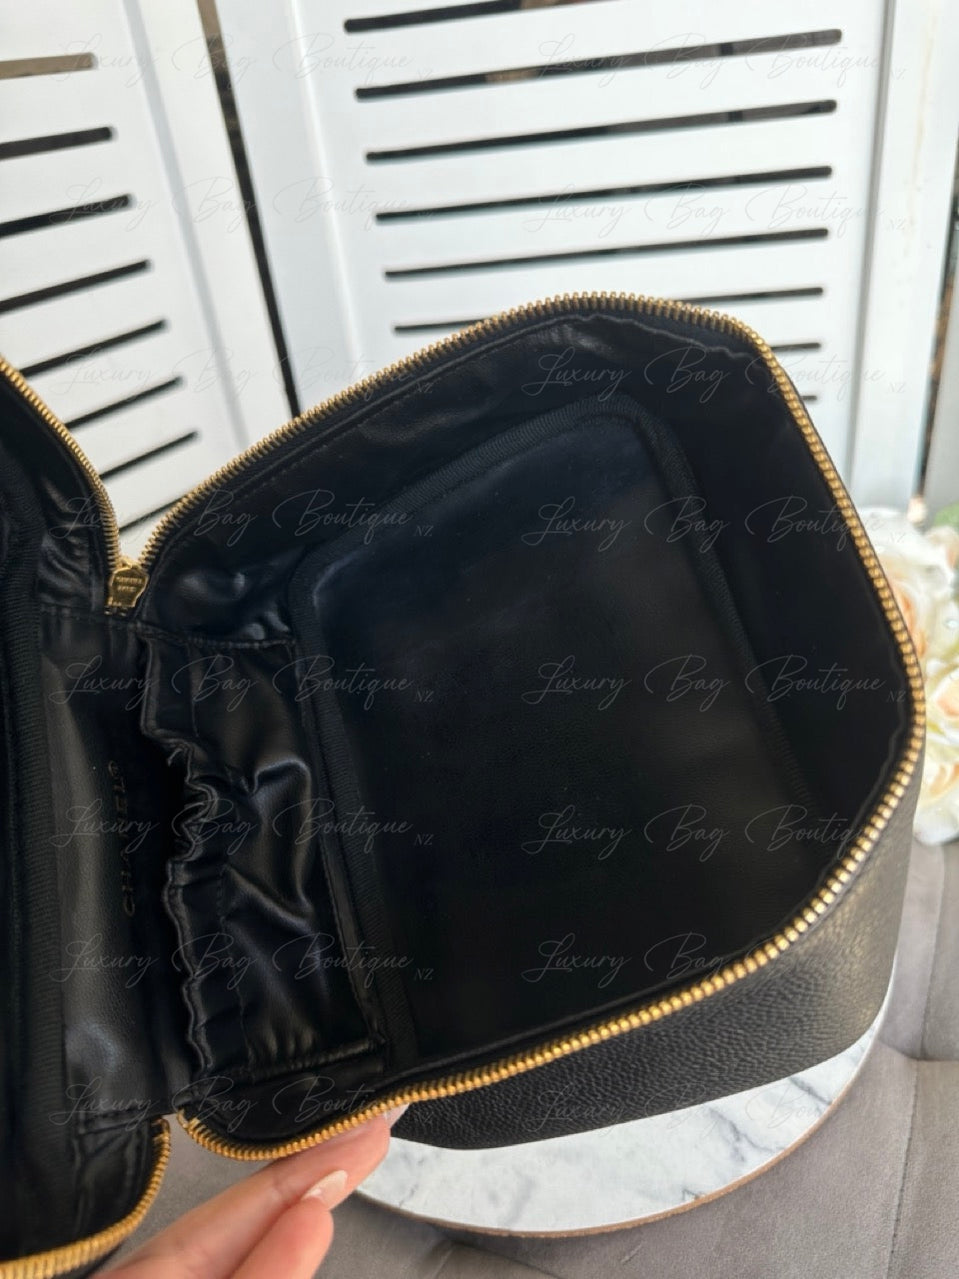 Chanel Caviar Vainity Bag